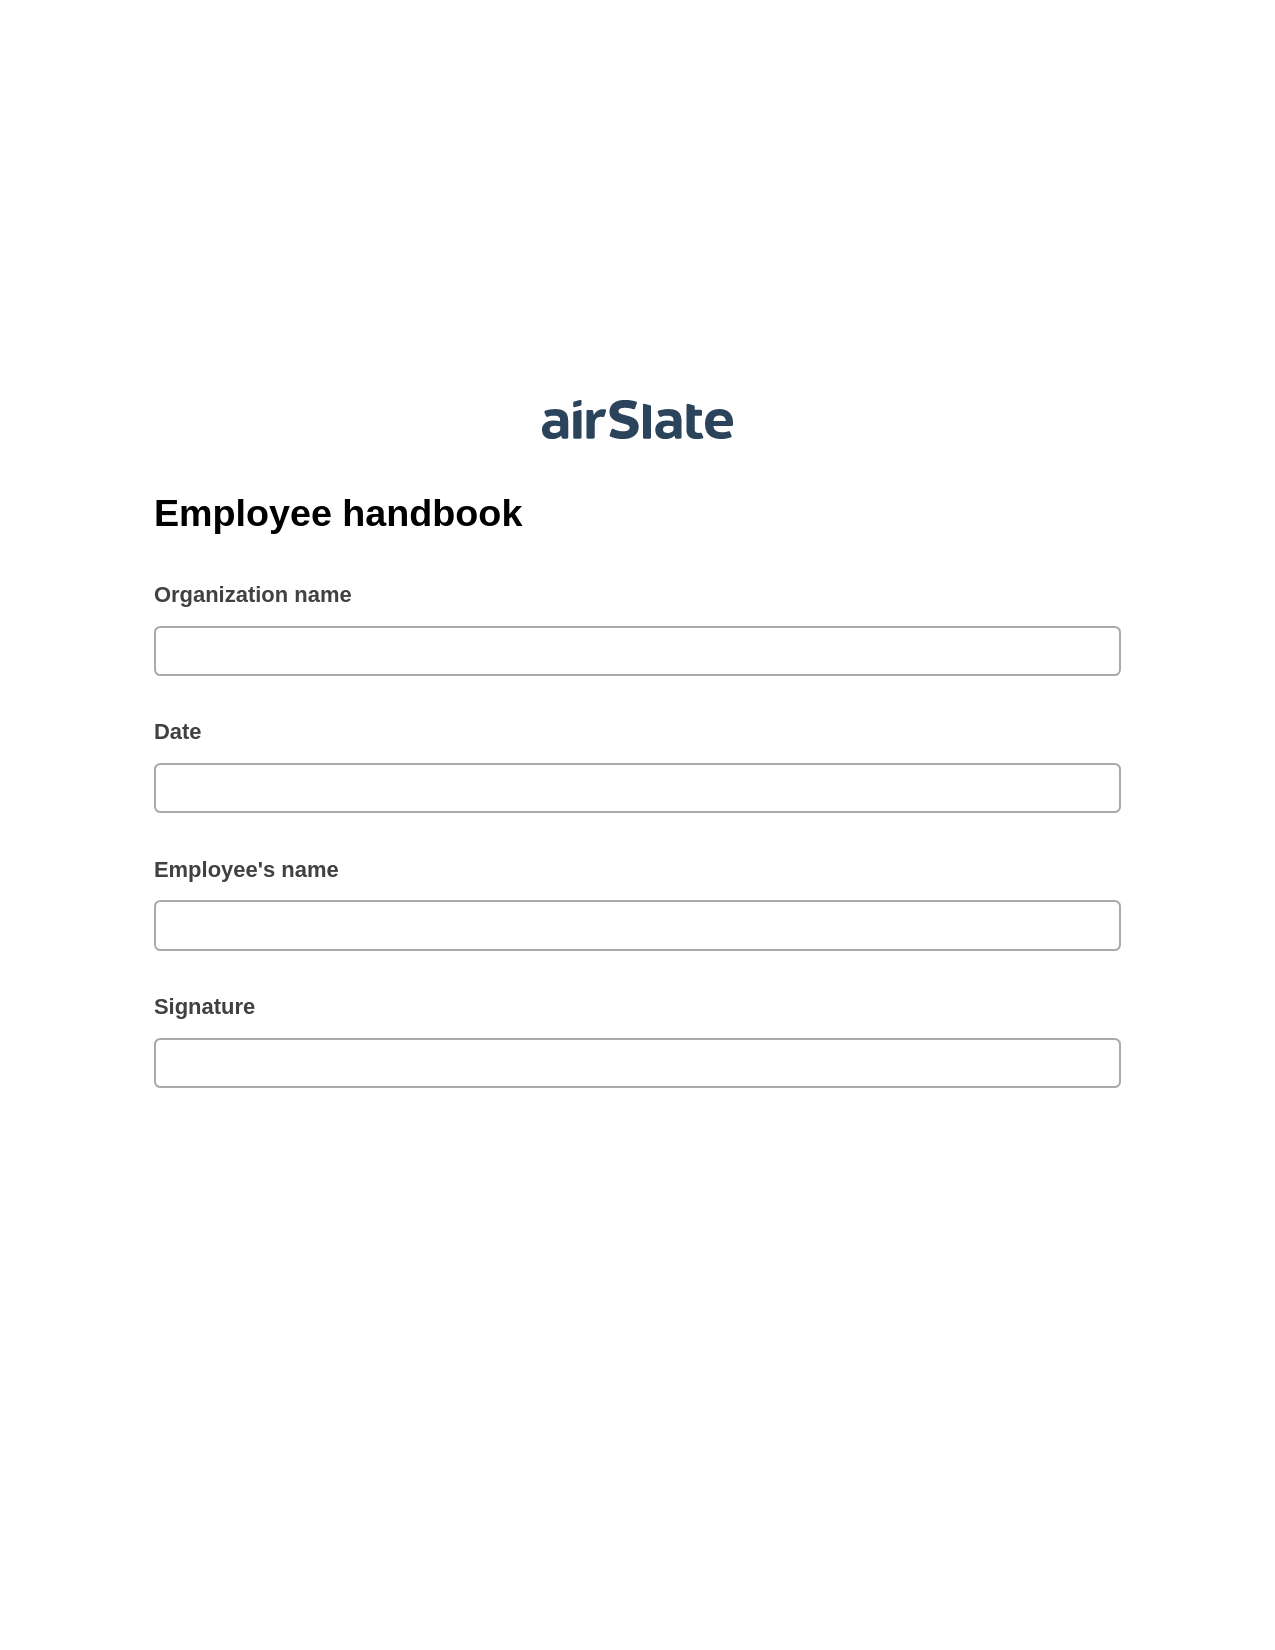 Employee handbook Pre-fill from Excel Spreadsheet Bot, Create Slate Reminder Bot, Webhook Postfinish Bot